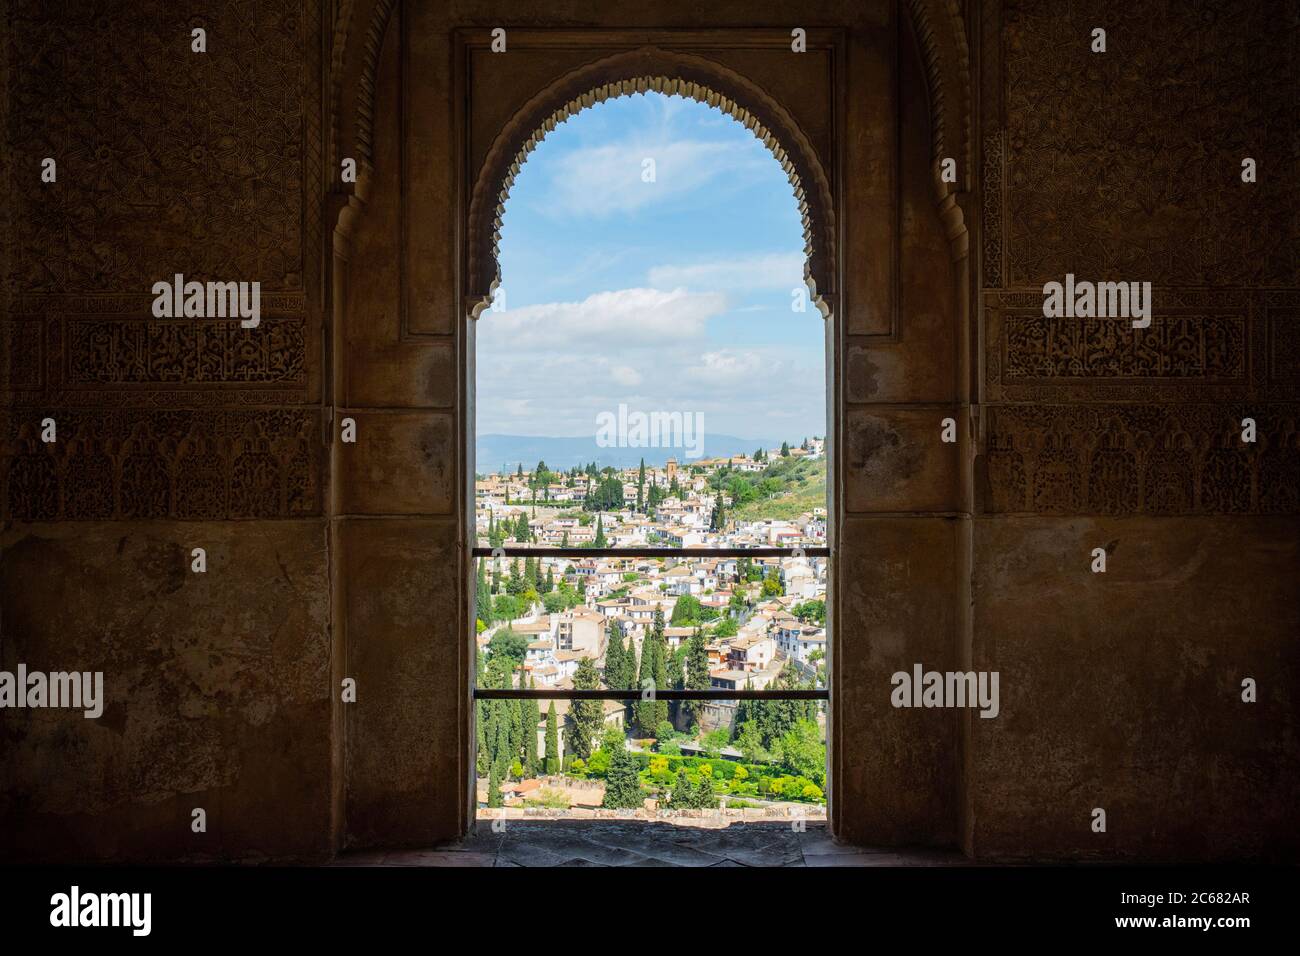 View of Albaicín Through an Ornate Doorway - Granada, Spain Stock Photo